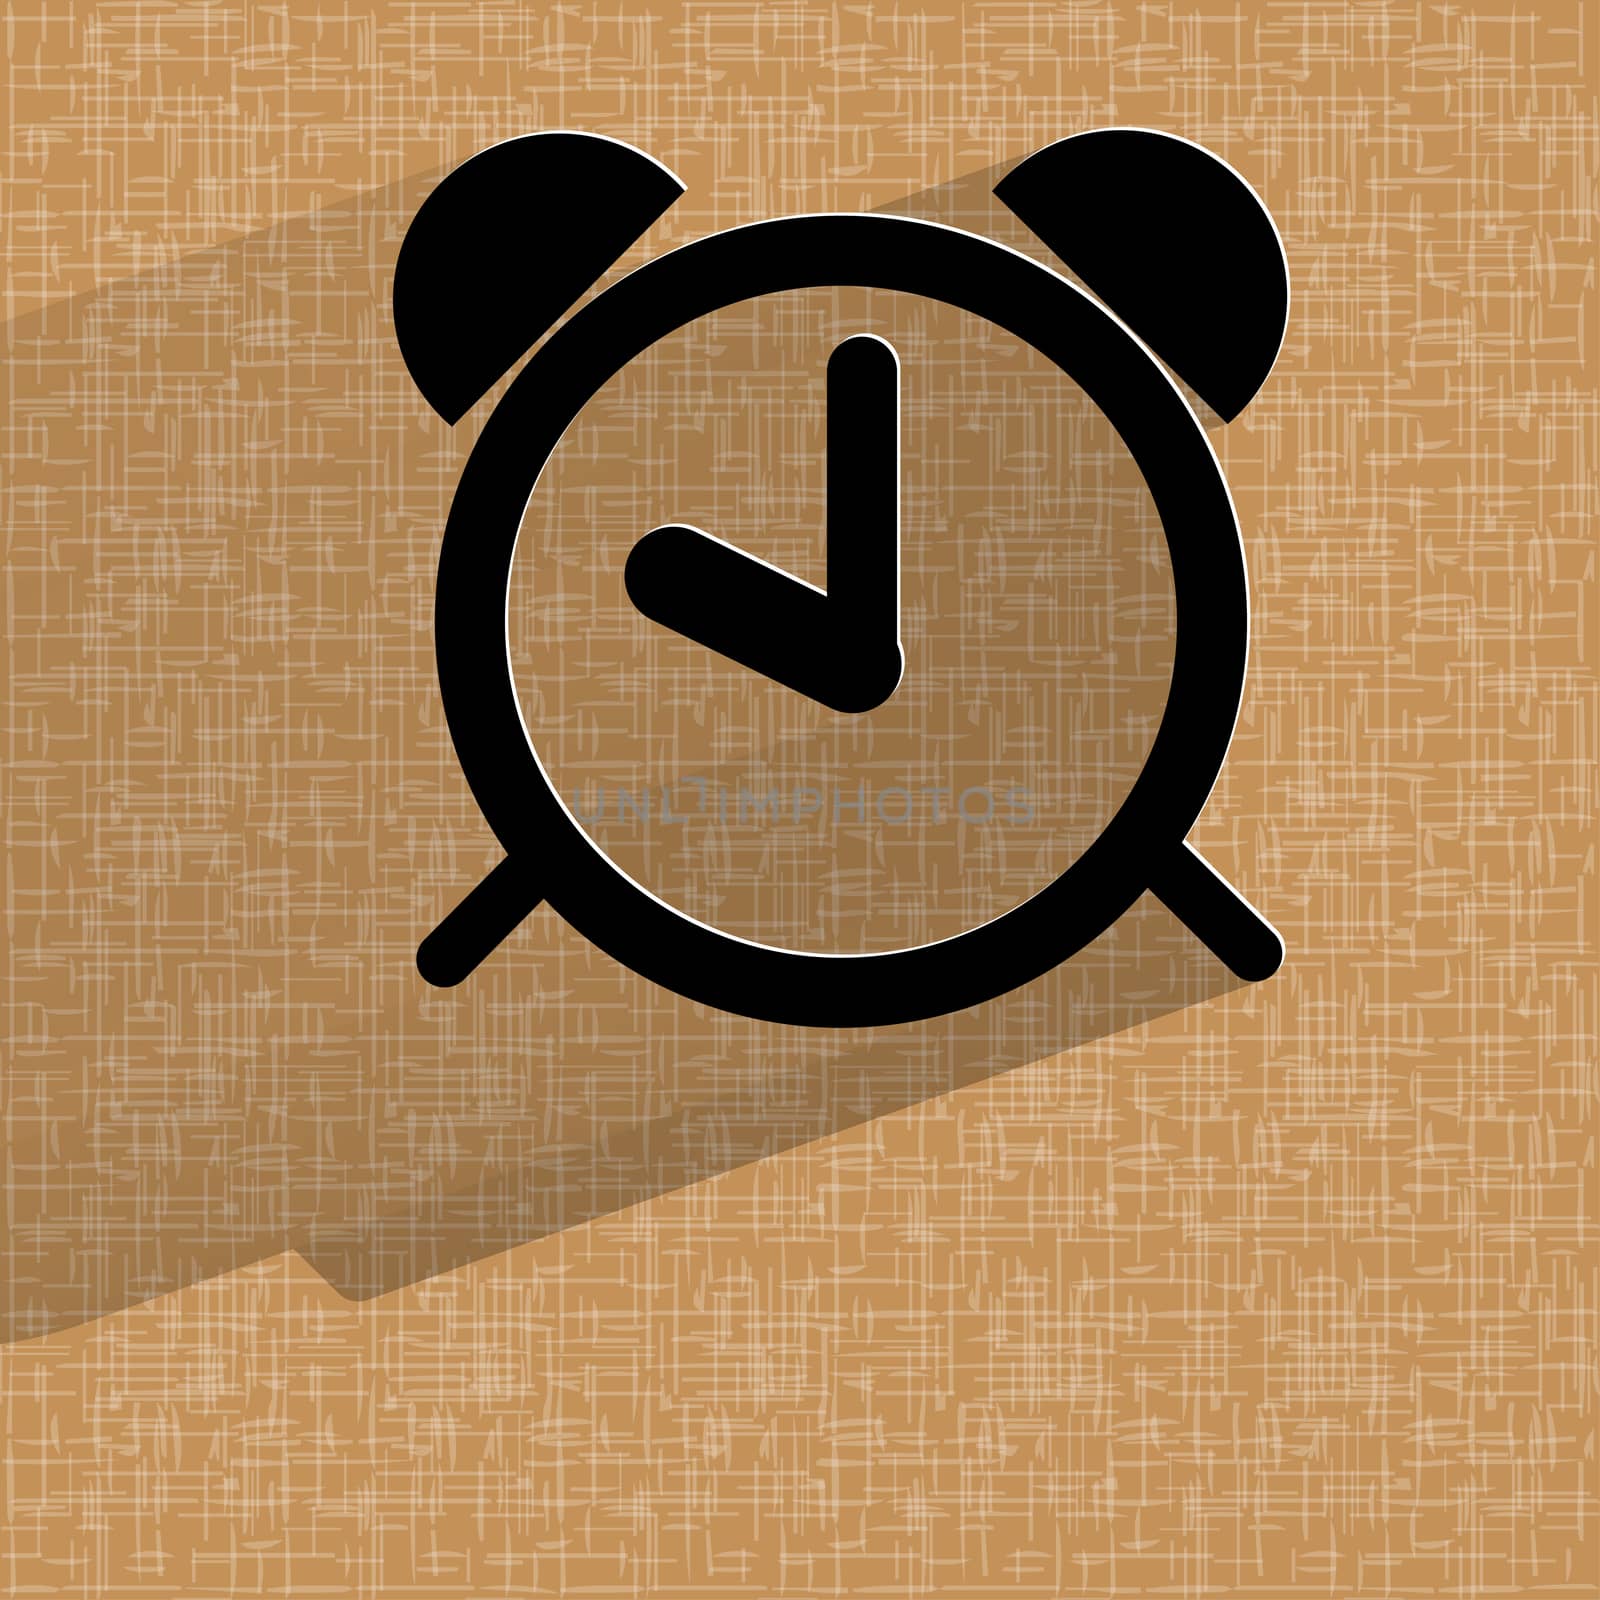 alarm clock. Flat modern web design on a flat geometric abstract background  by serhii_lohvyniuk